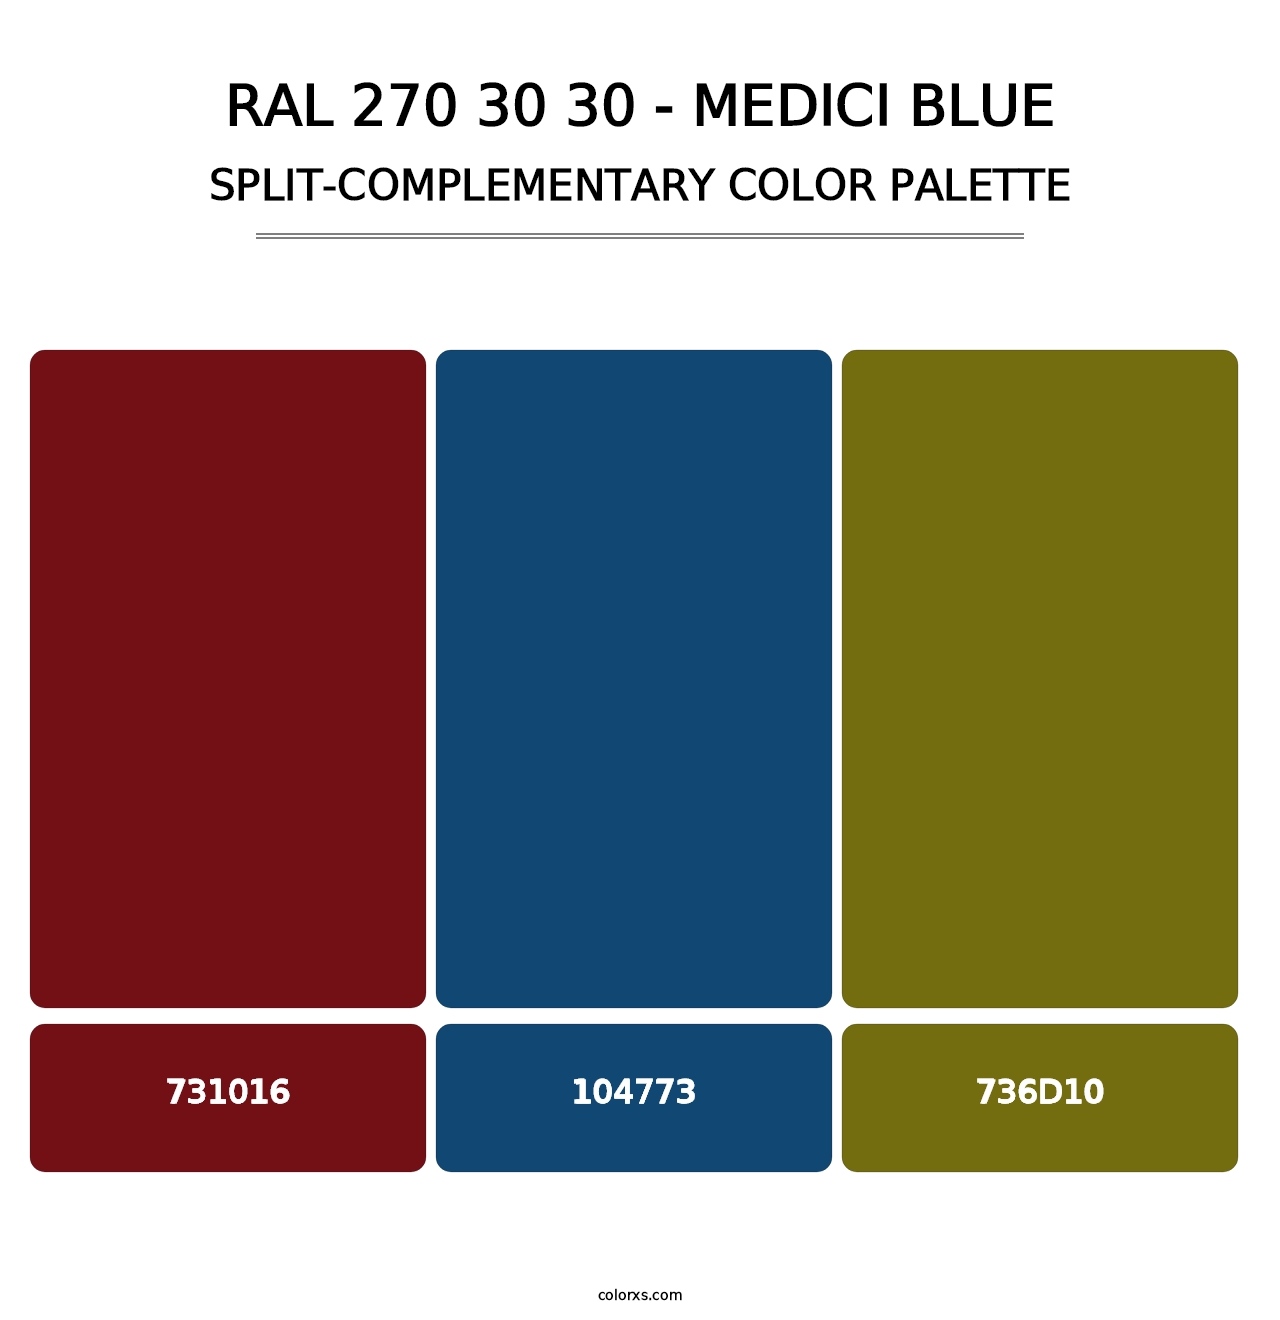 RAL 270 30 30 - Medici Blue - Split-Complementary Color Palette